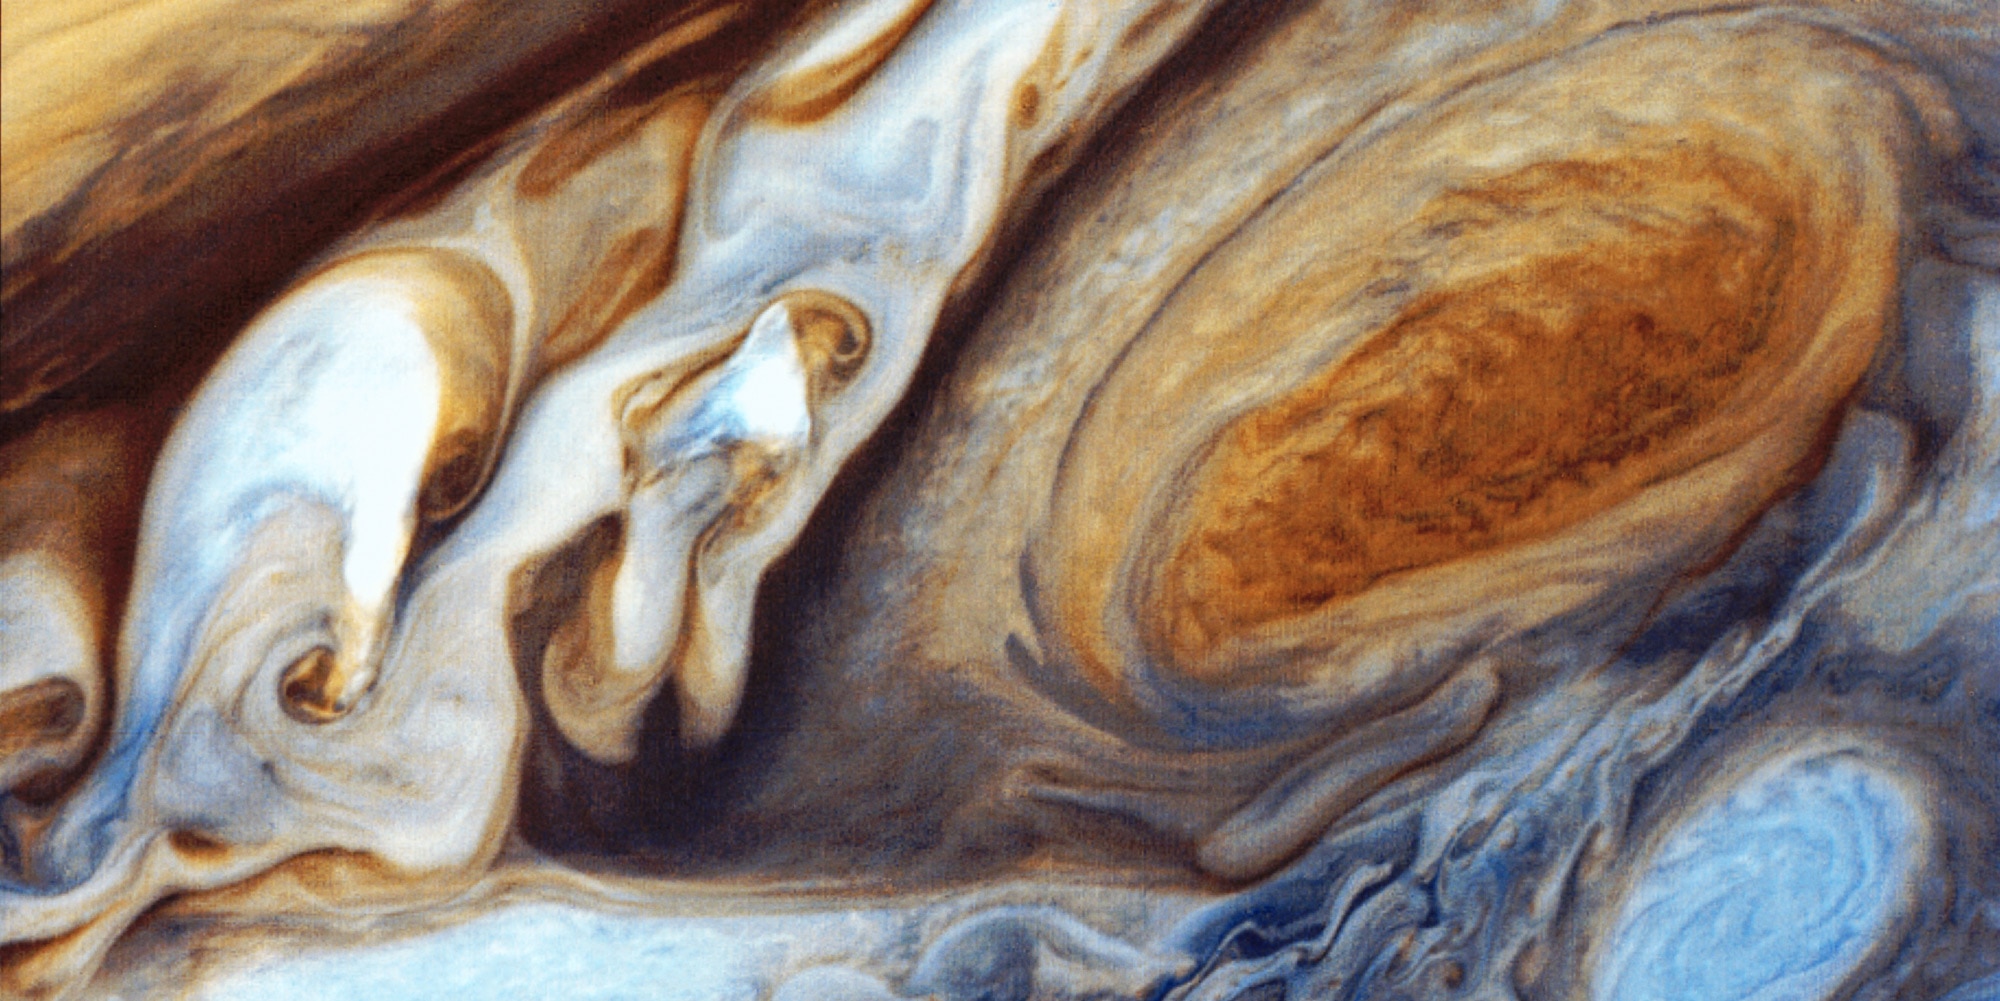 Jupiter from Voyager